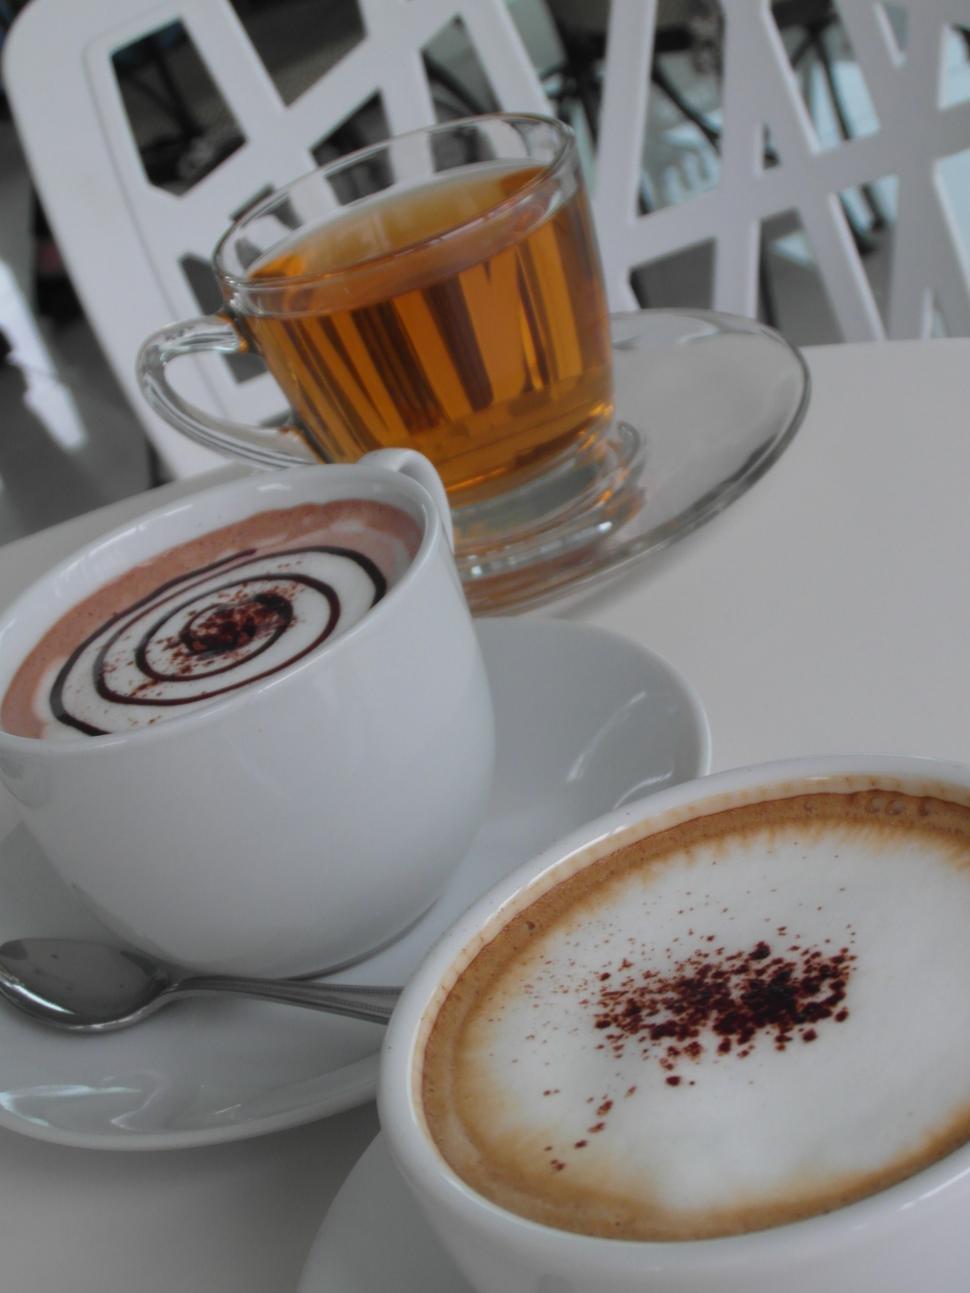 Free Image of Tea, Coffee and Hot Chocolate 